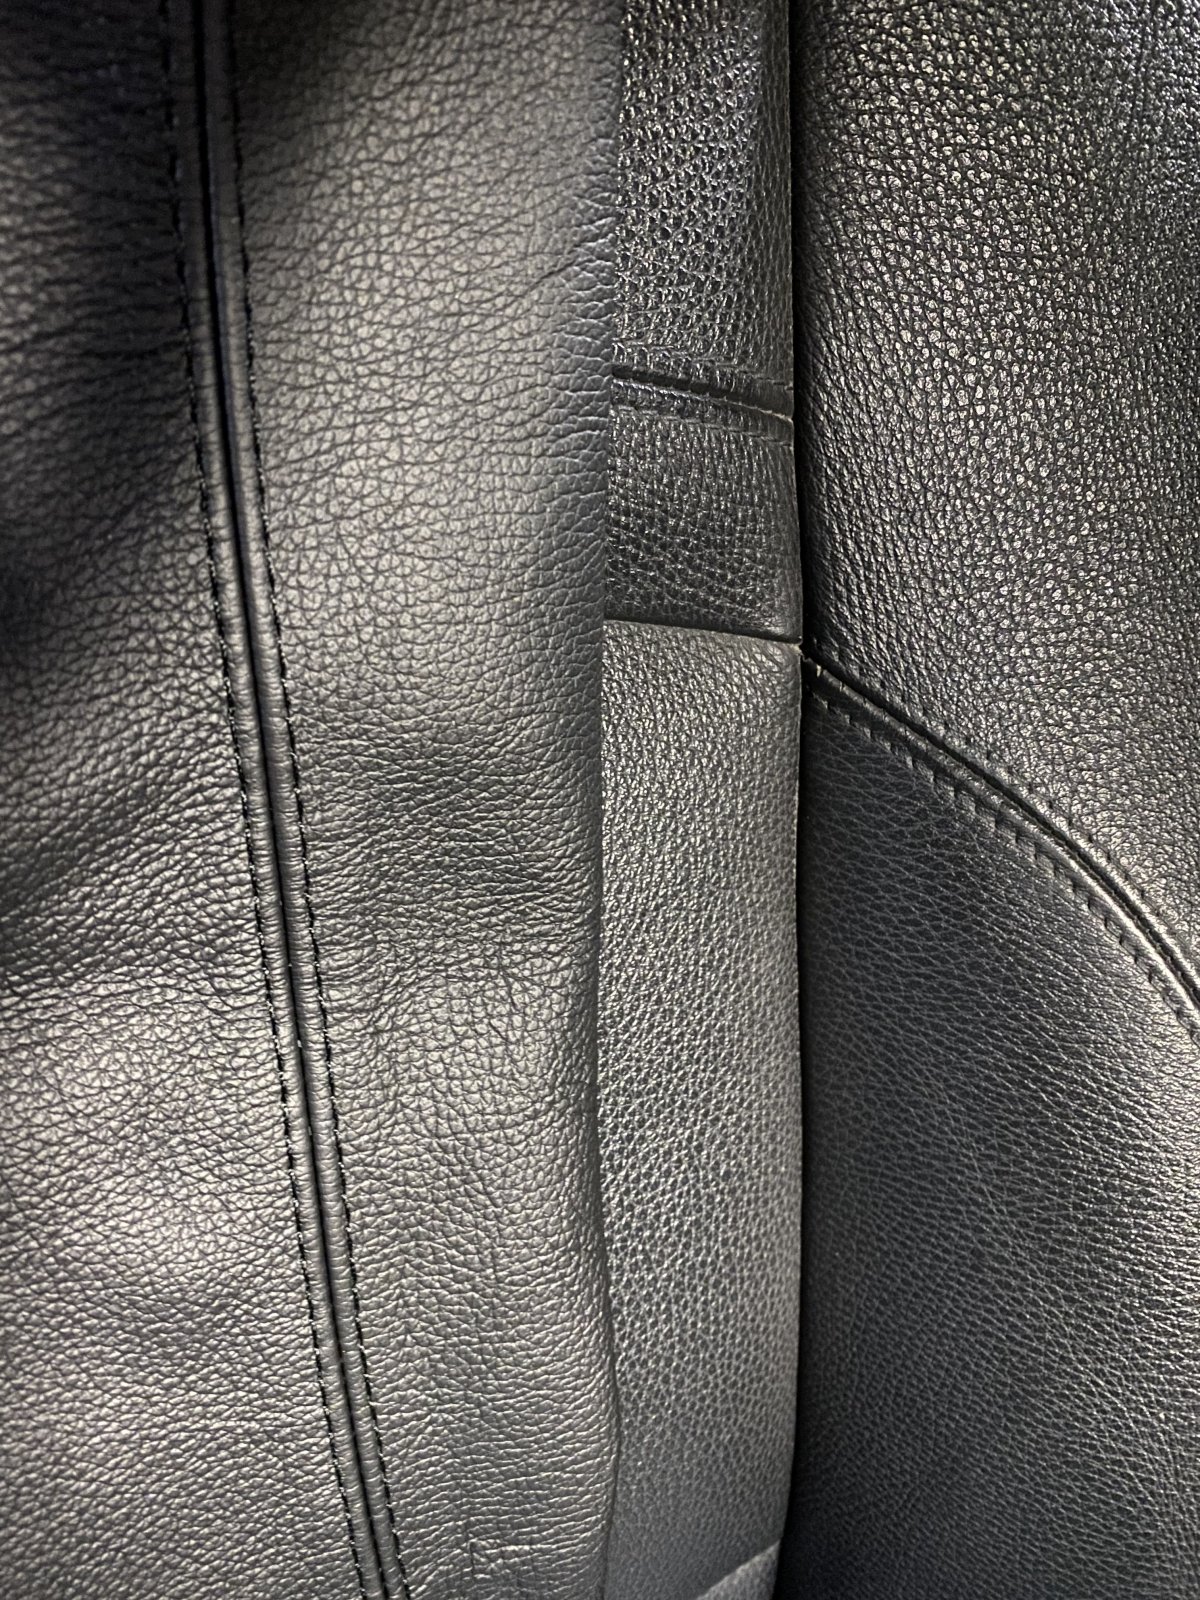 Leather.jpg